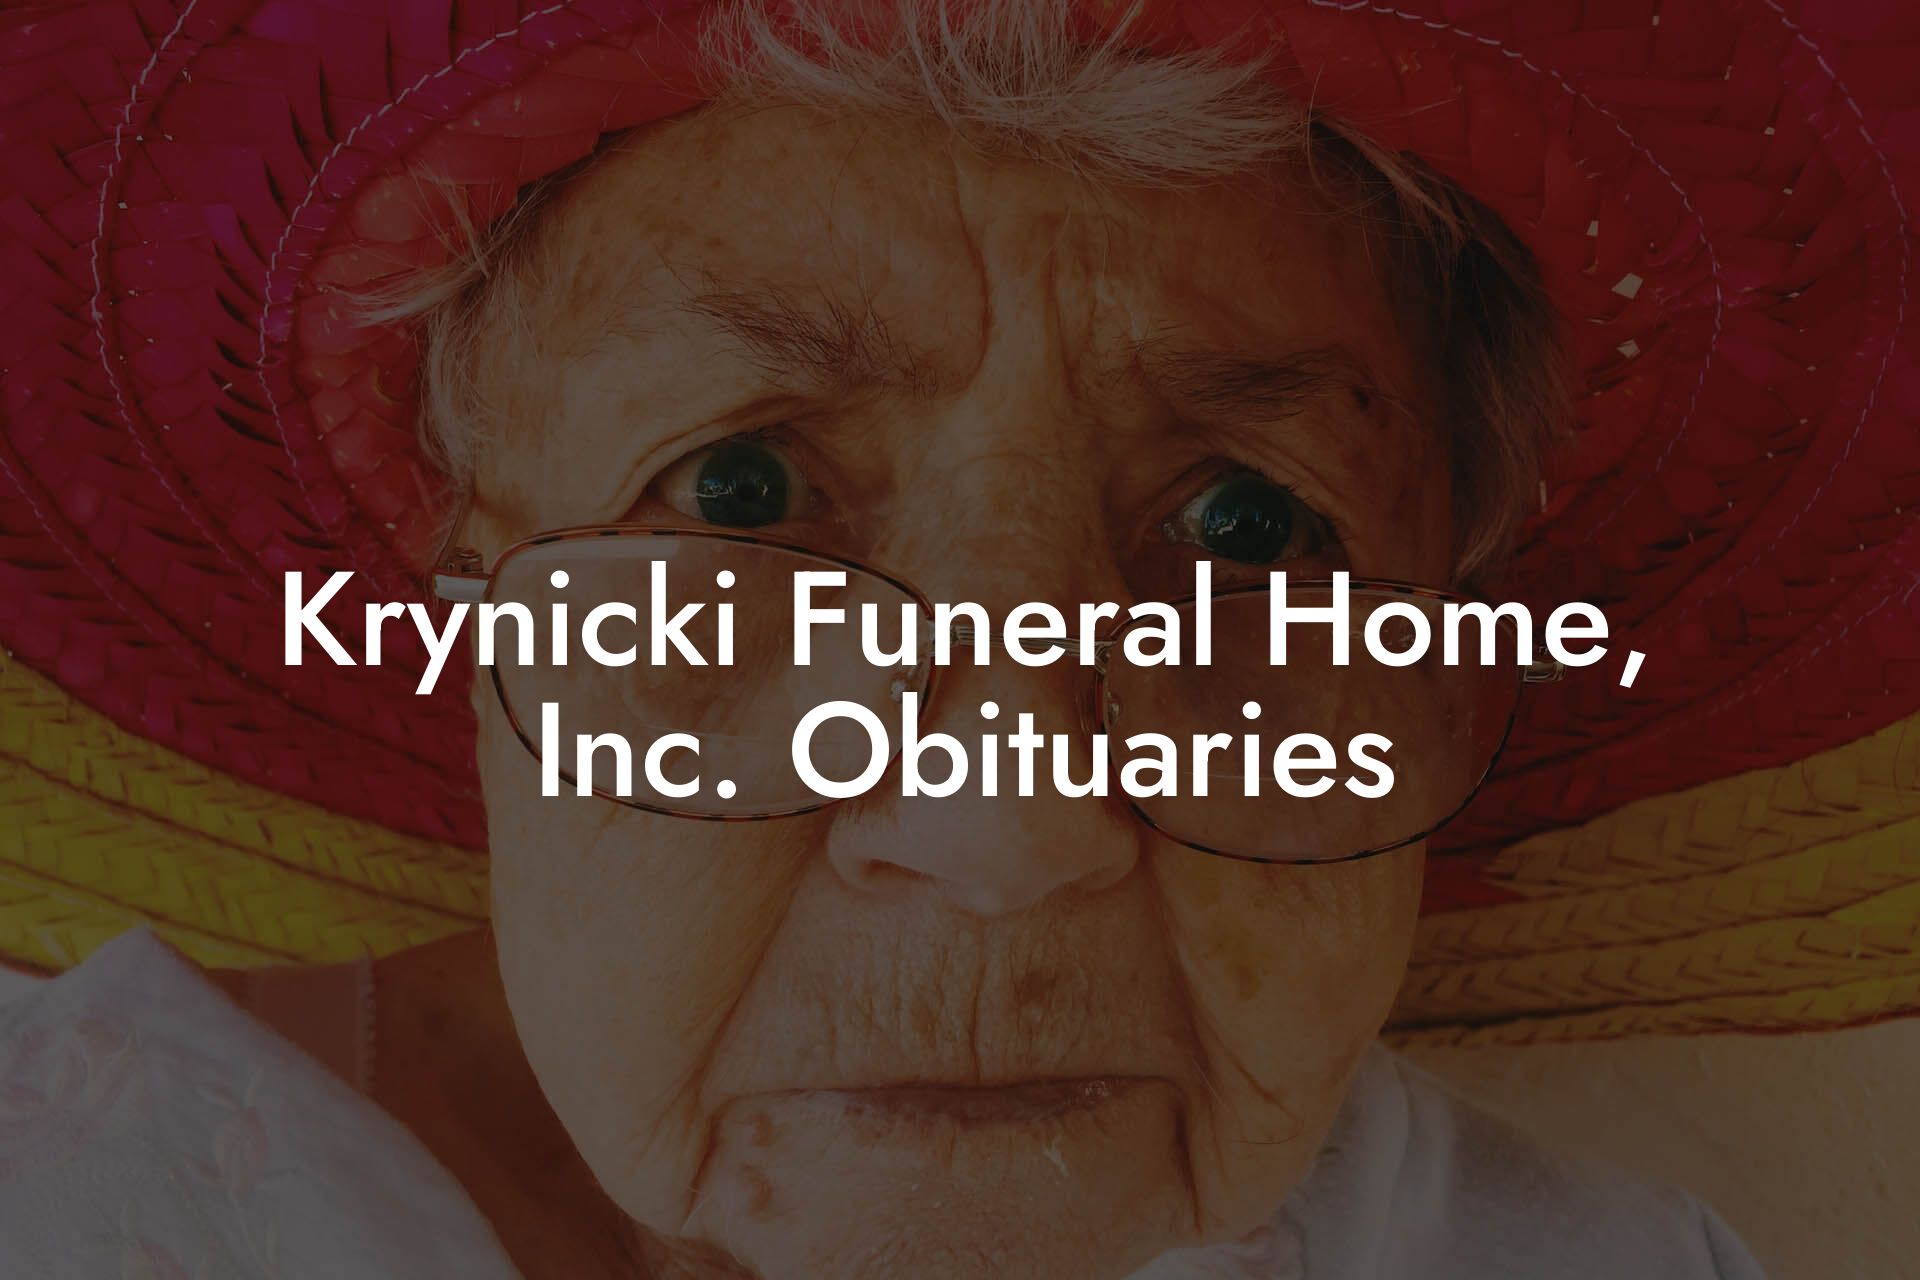 Krynicki Funeral Home, Inc. Obituaries